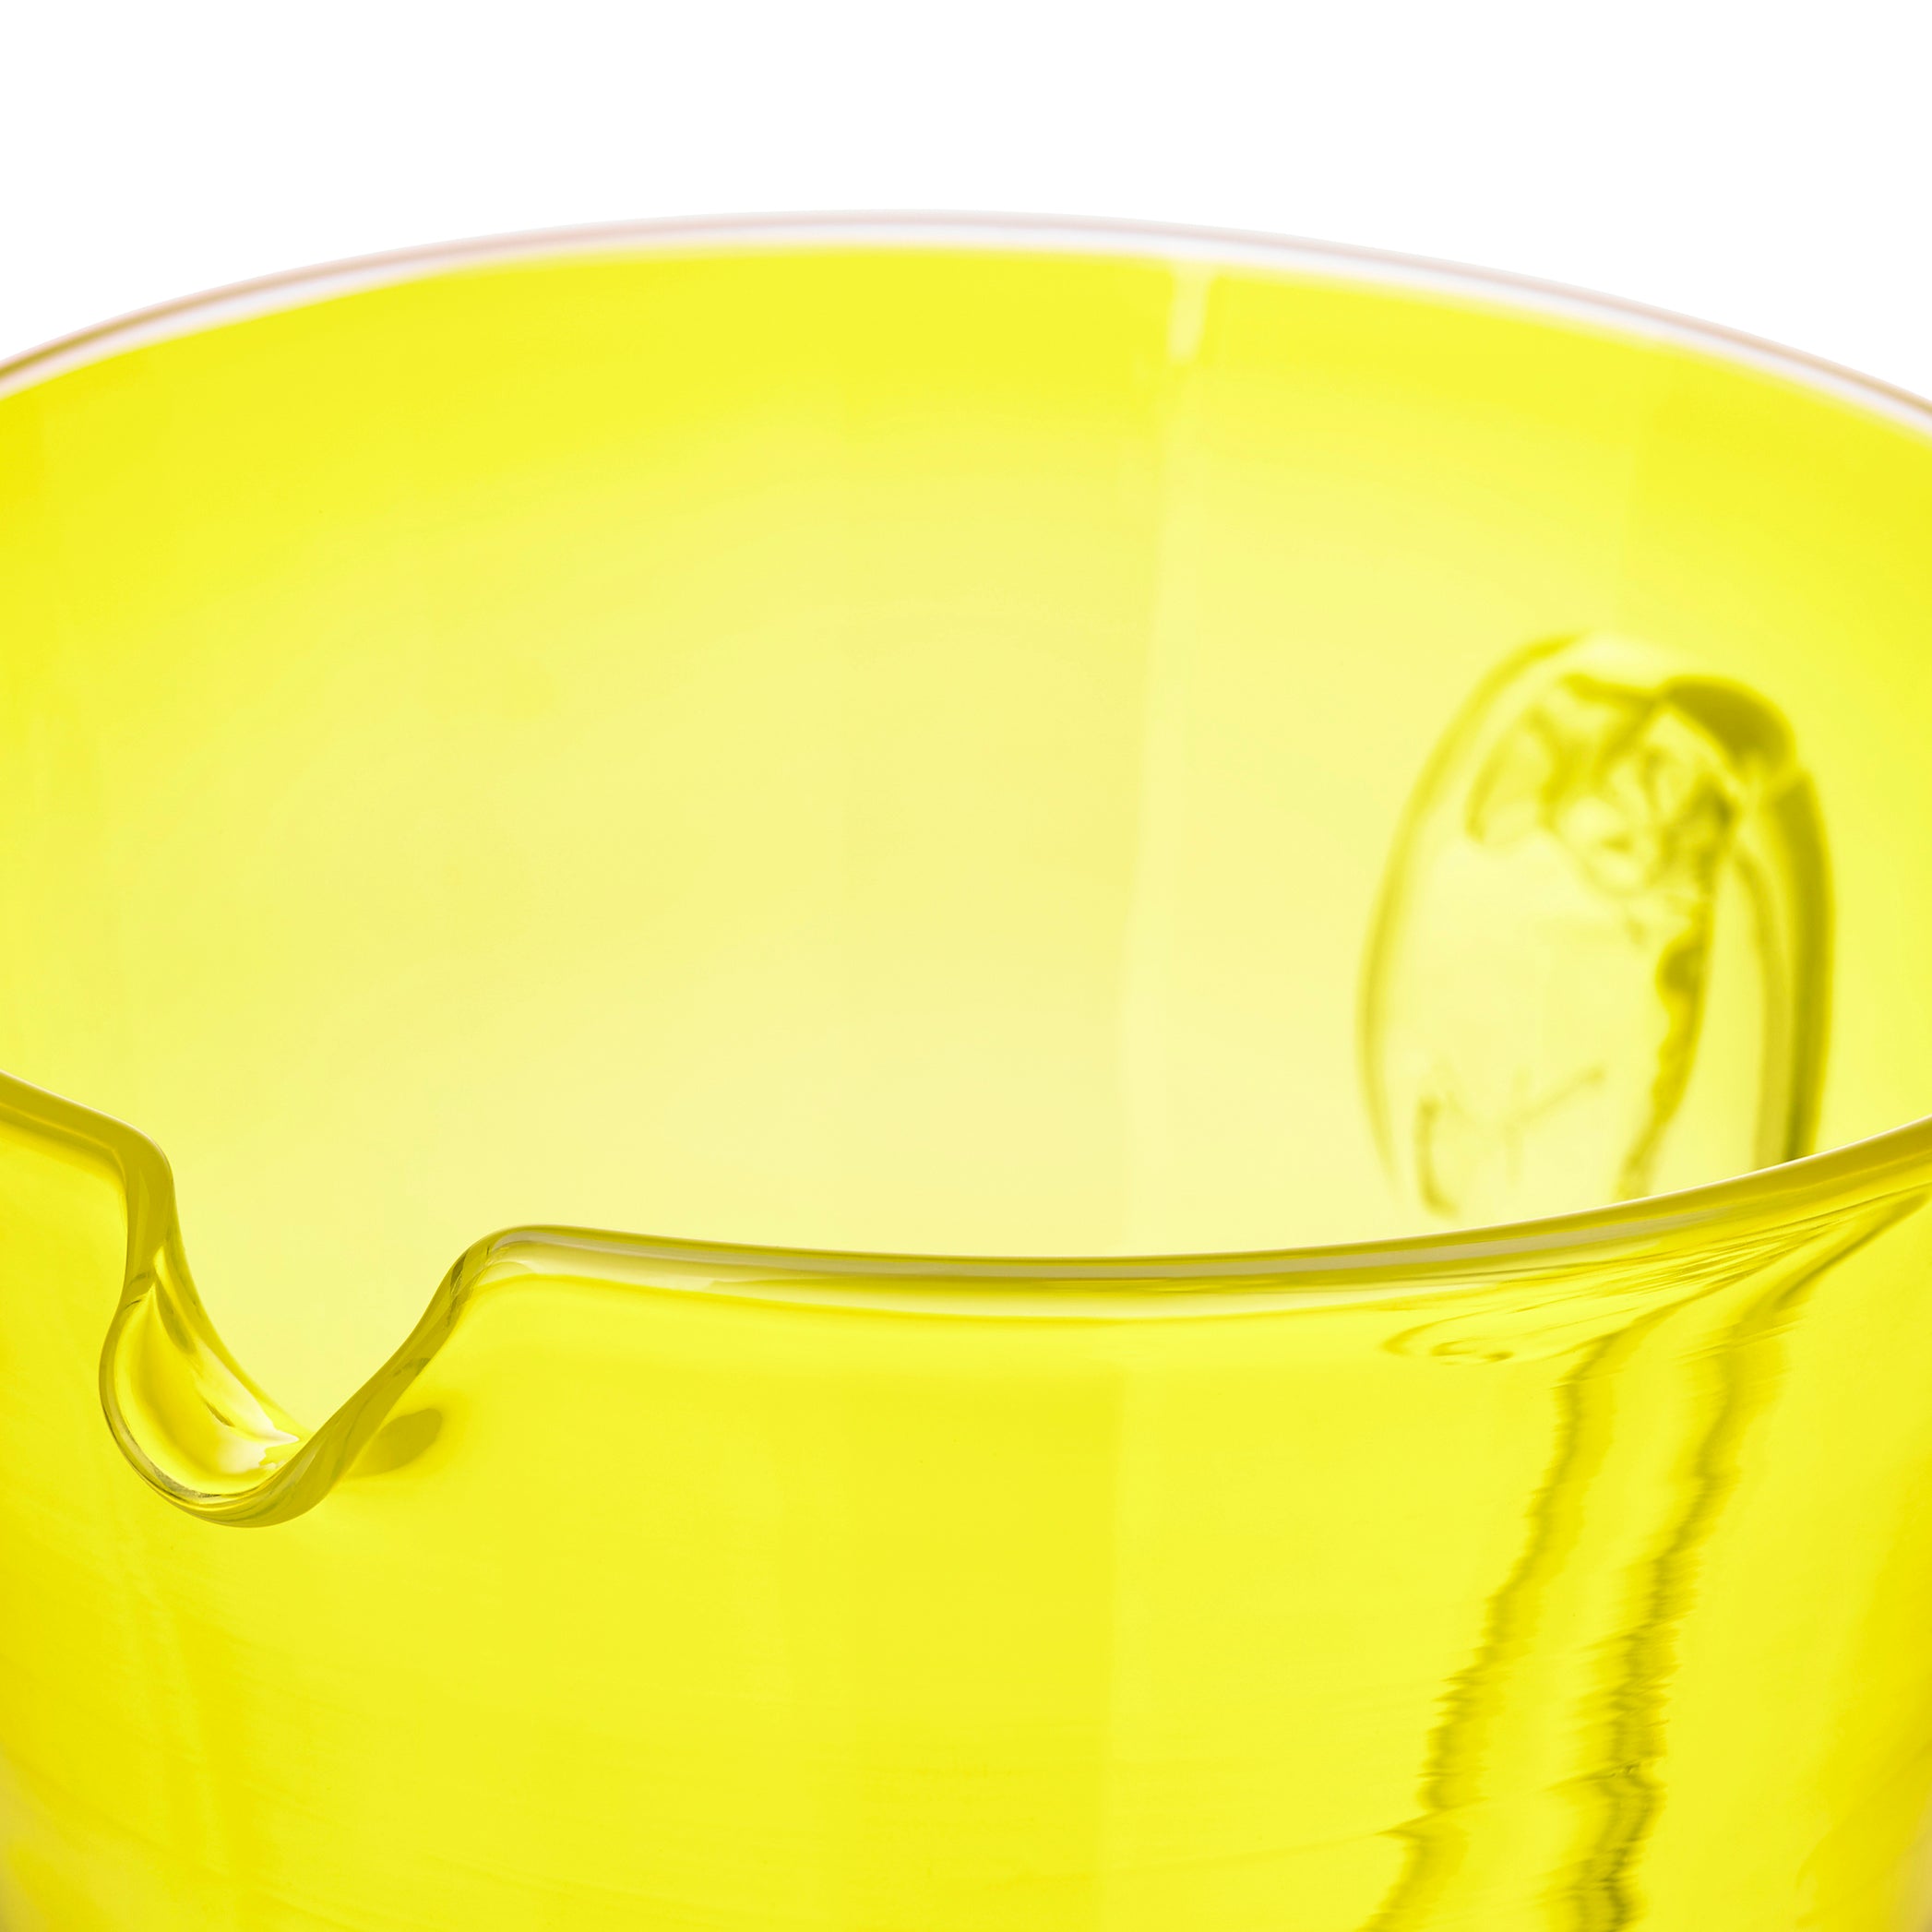 Handblown Glass Clair Jug in Lemon Yellow, 23cm